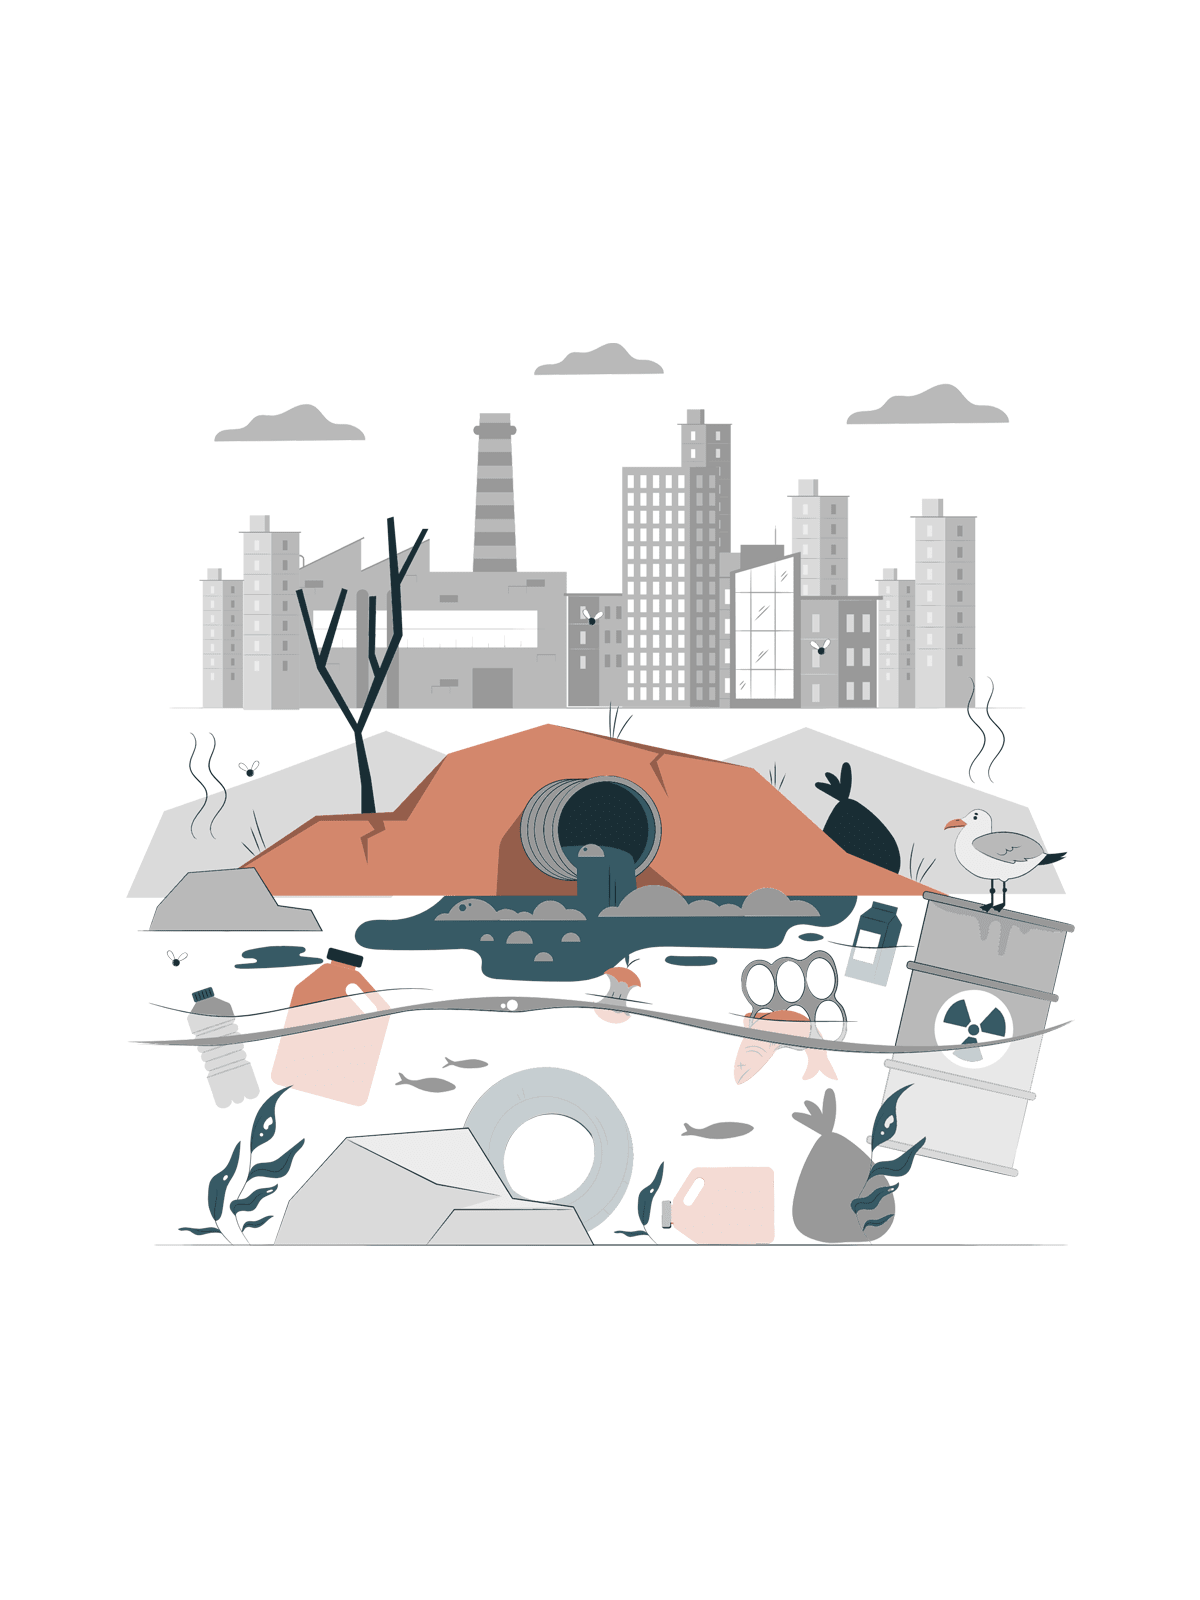 Inquinamento industria moda acqua ambiente illustration by storyset https://storyset.com/